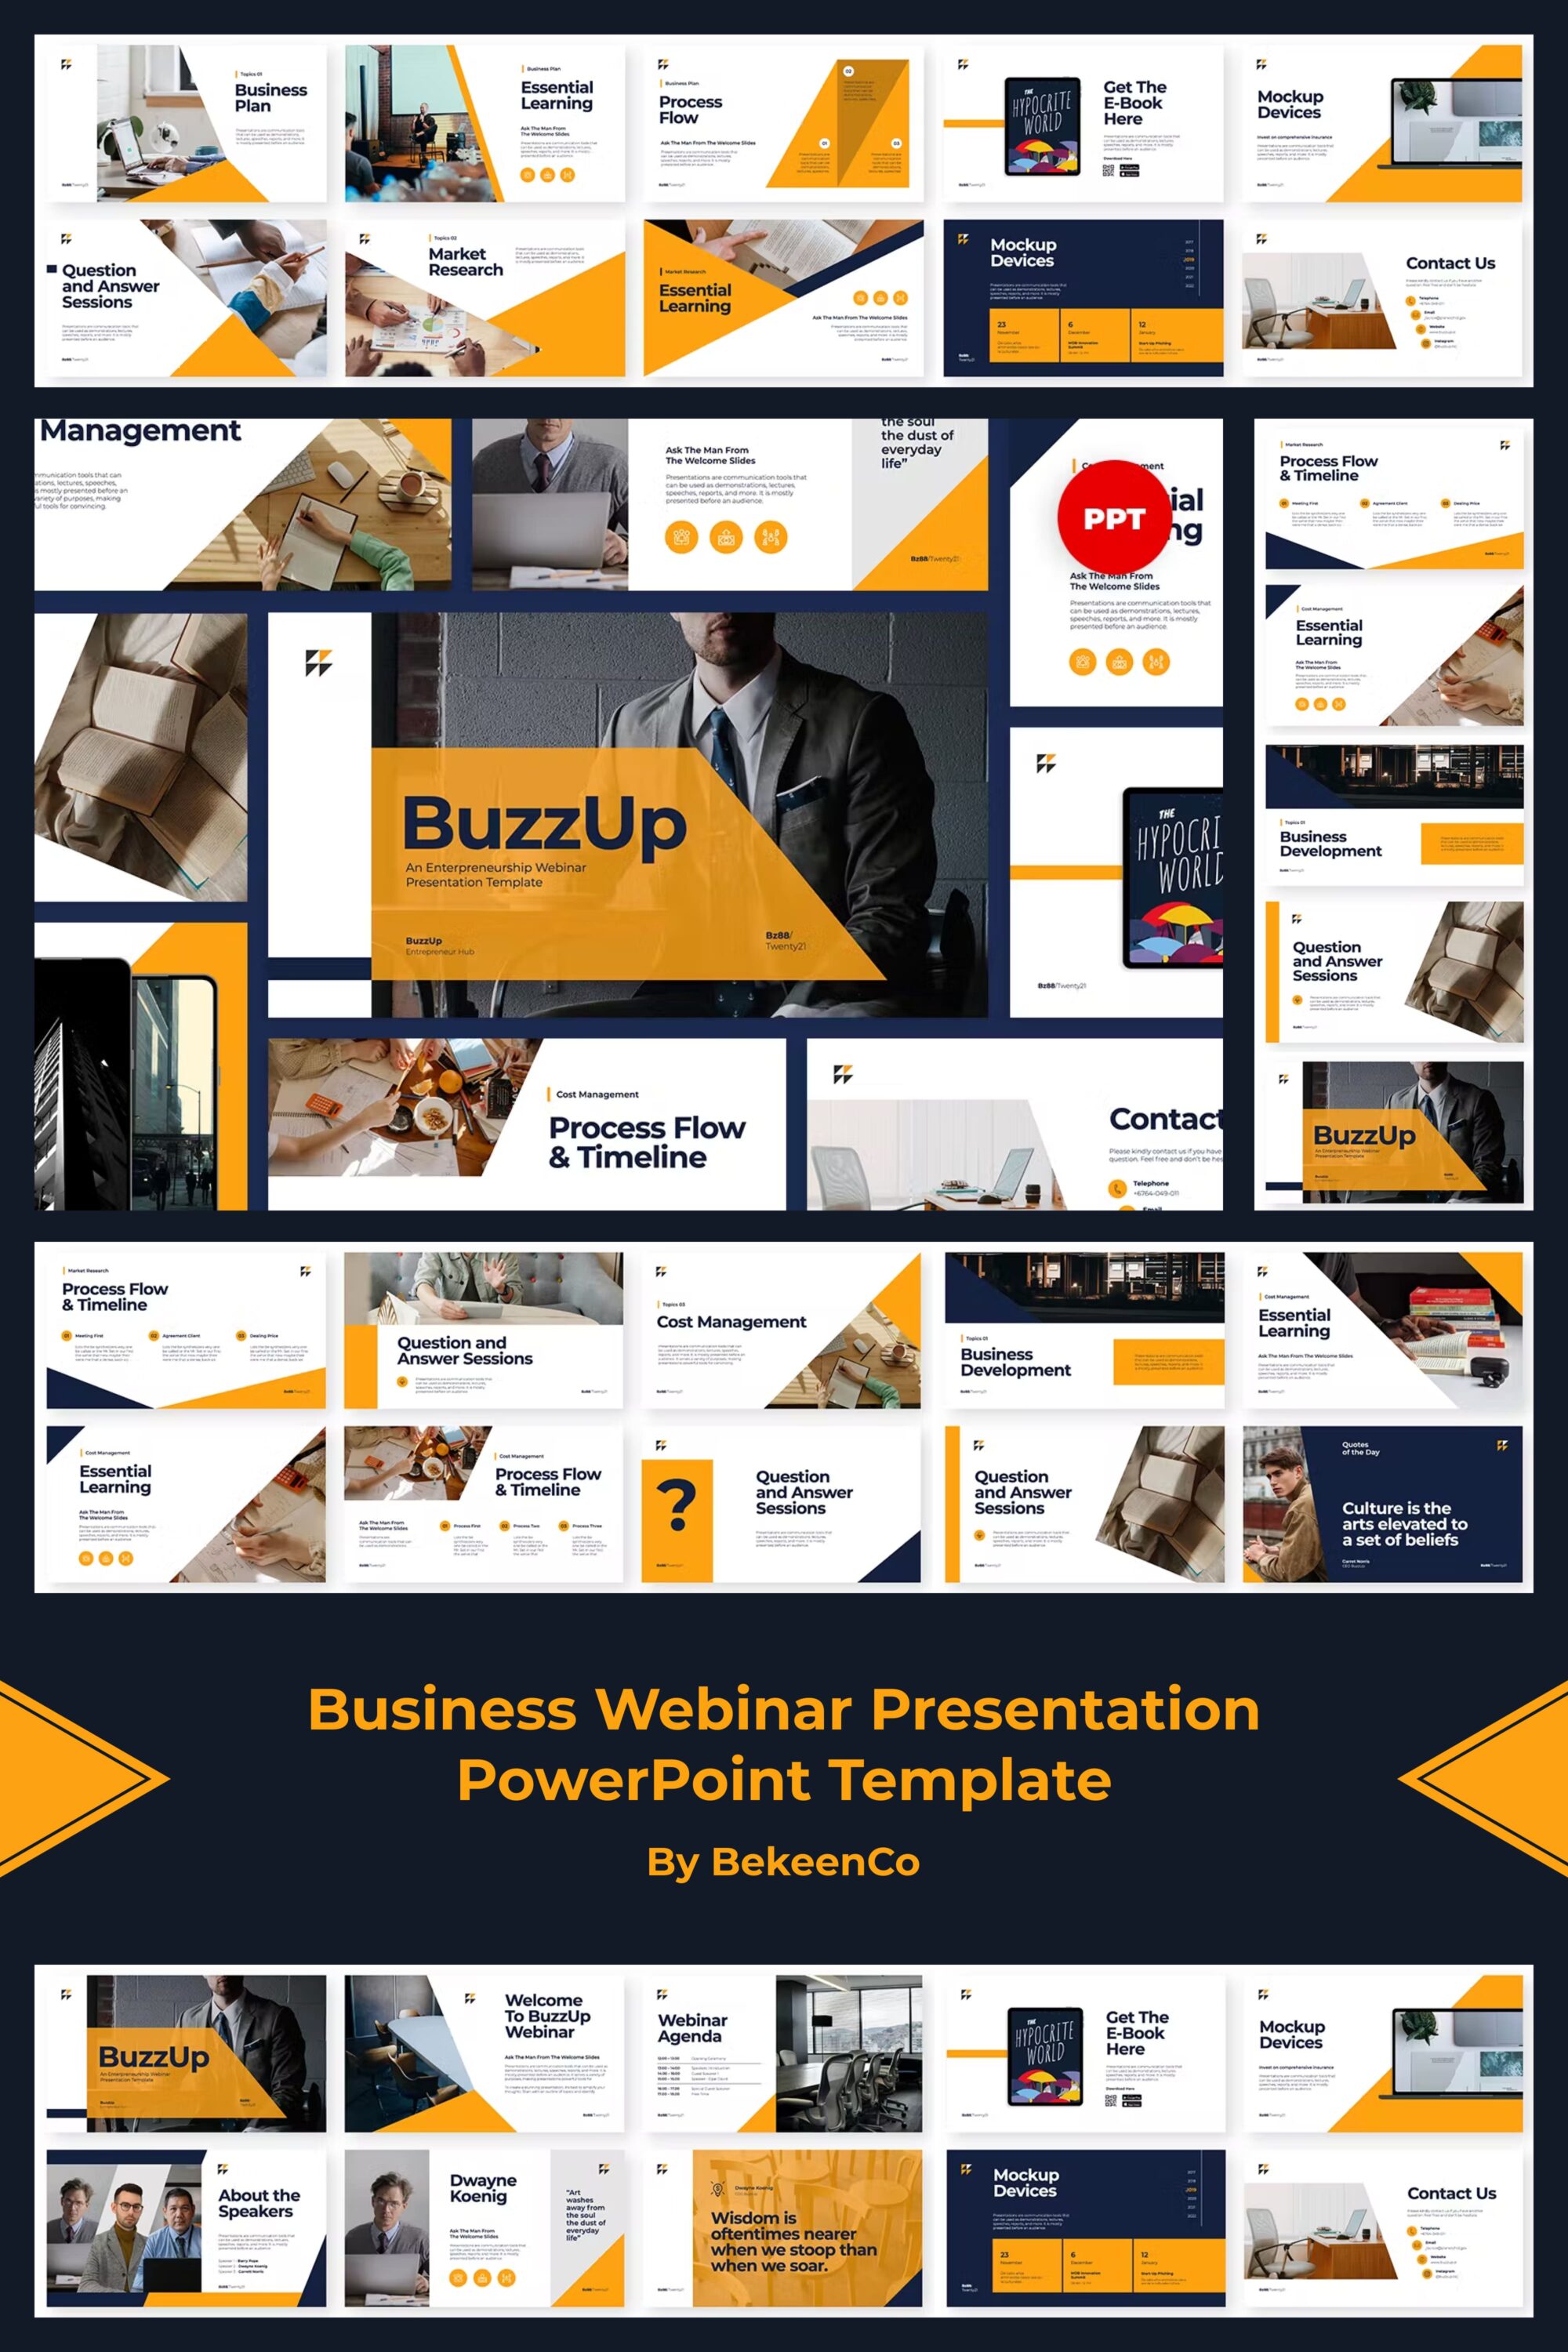 Business Webinar Presentation PowerPoint Template - pinterest image preview.